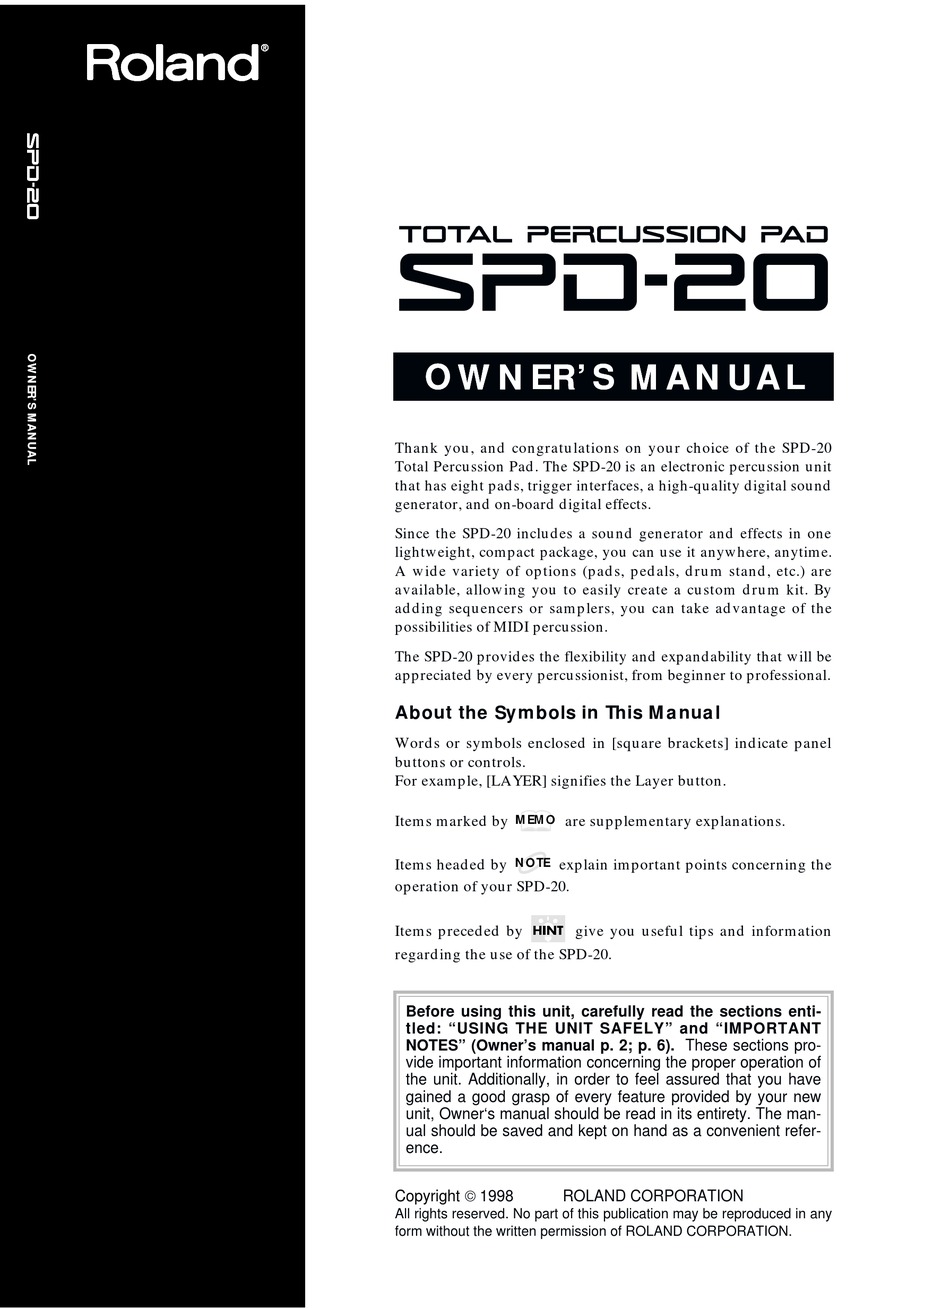 roland spd 20 manual pdf